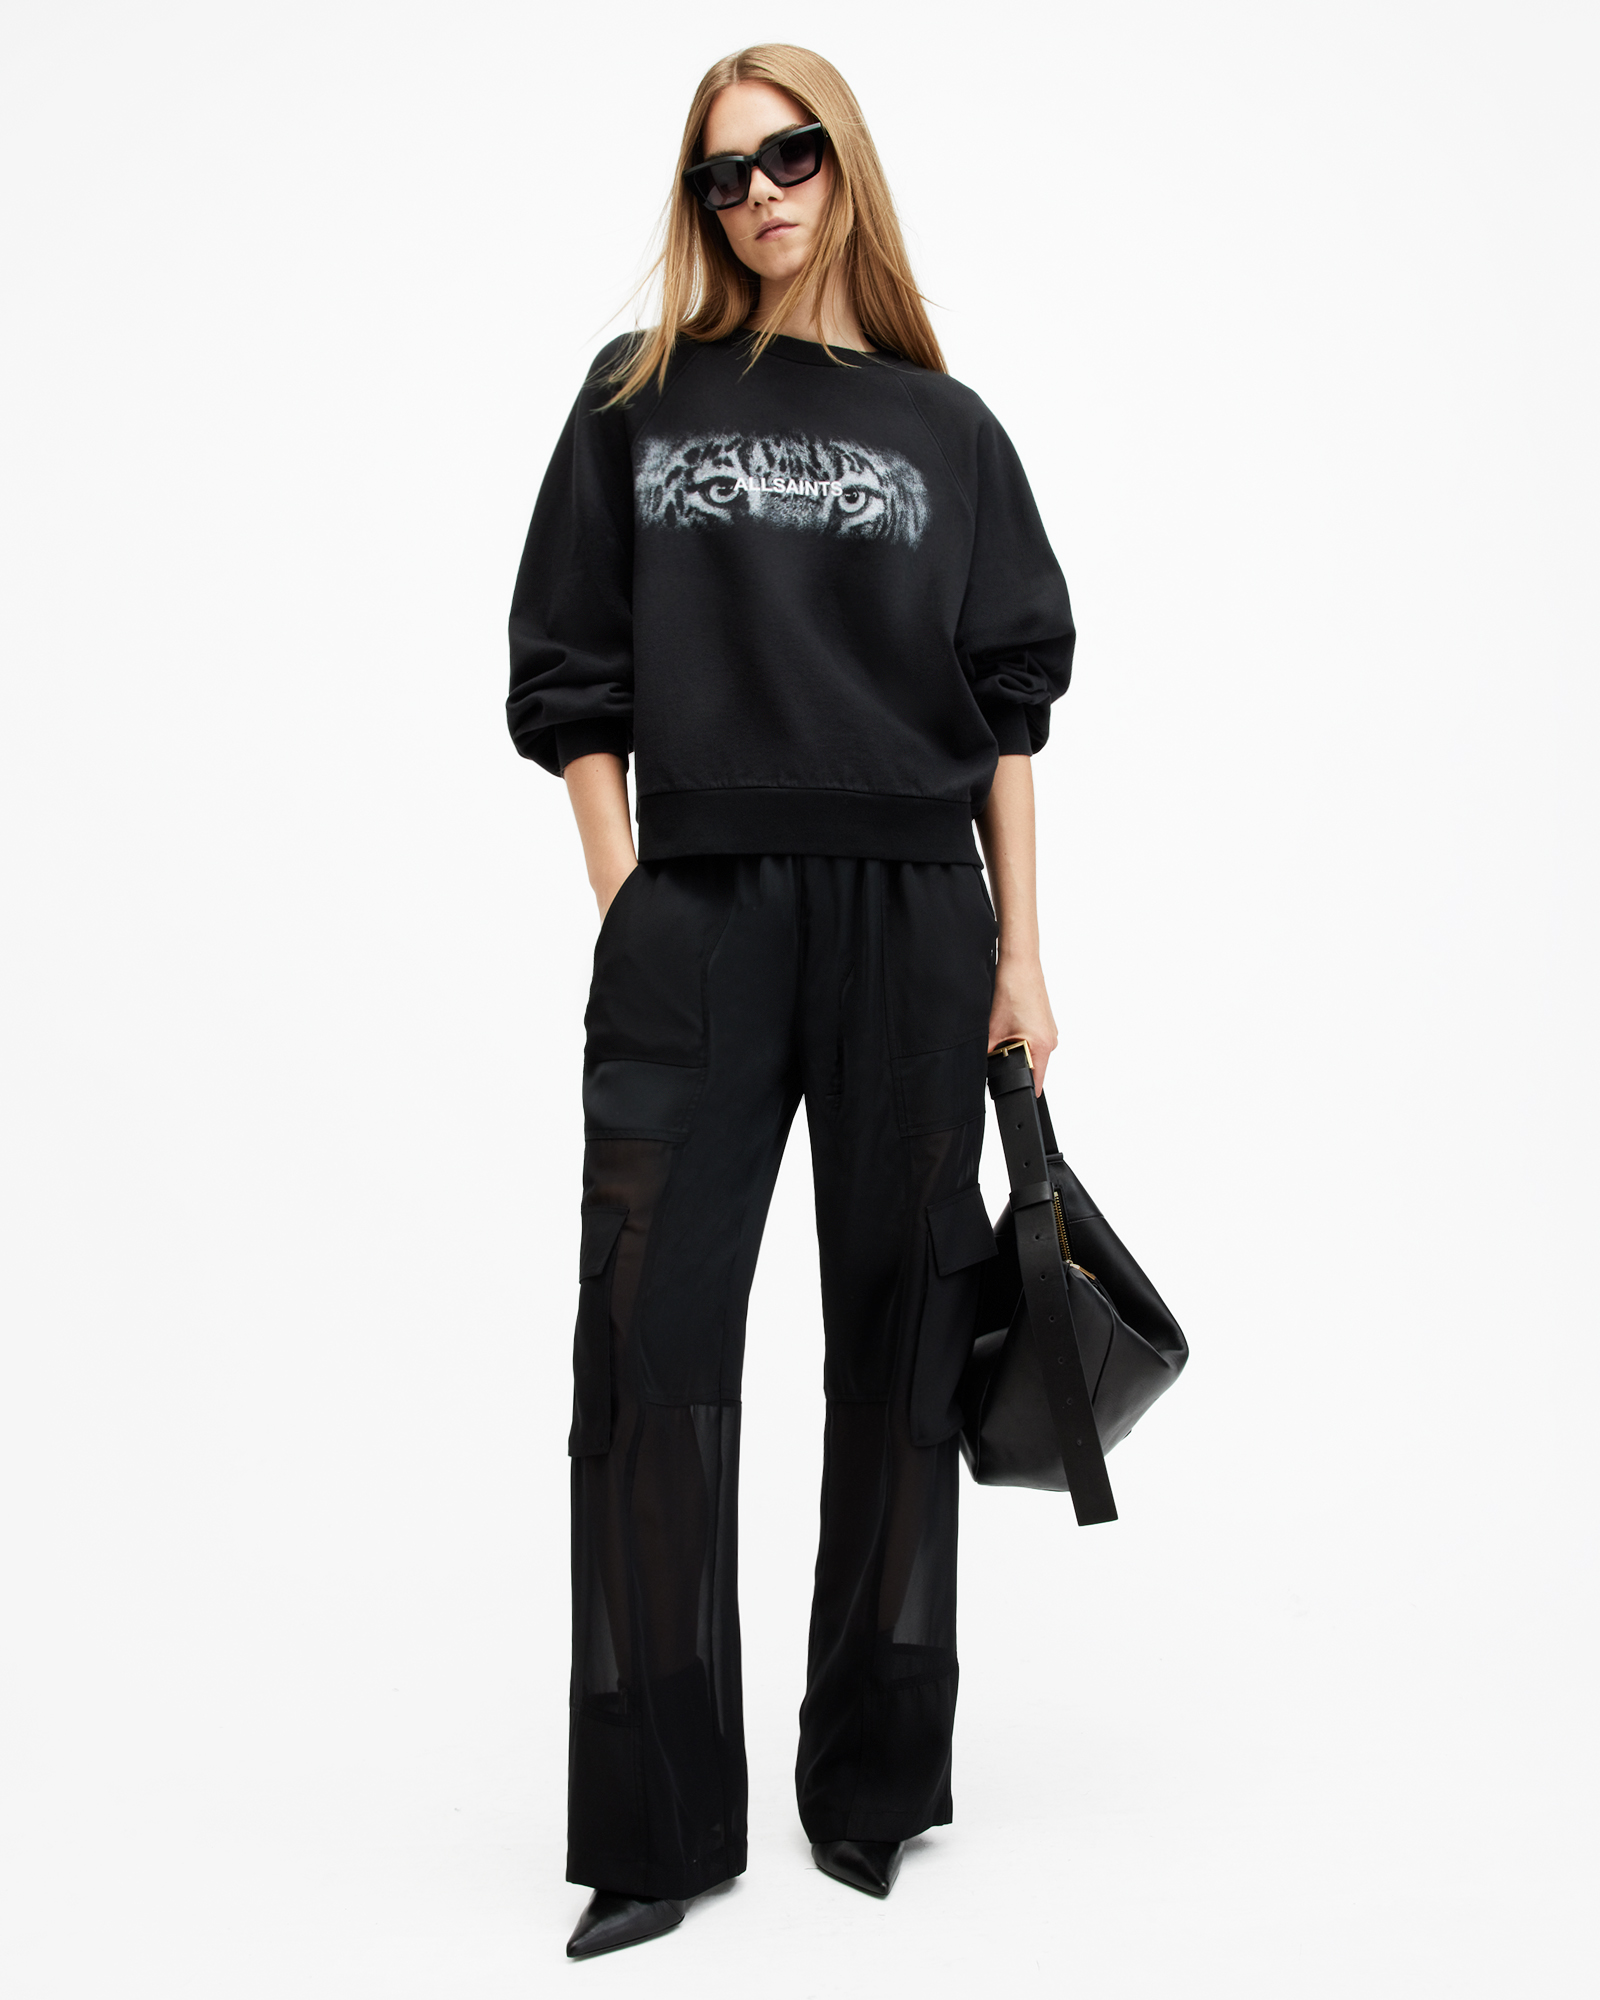 AllSaints Stare Cygni Relaxed Fit Sweatshirt,, Black, Size: